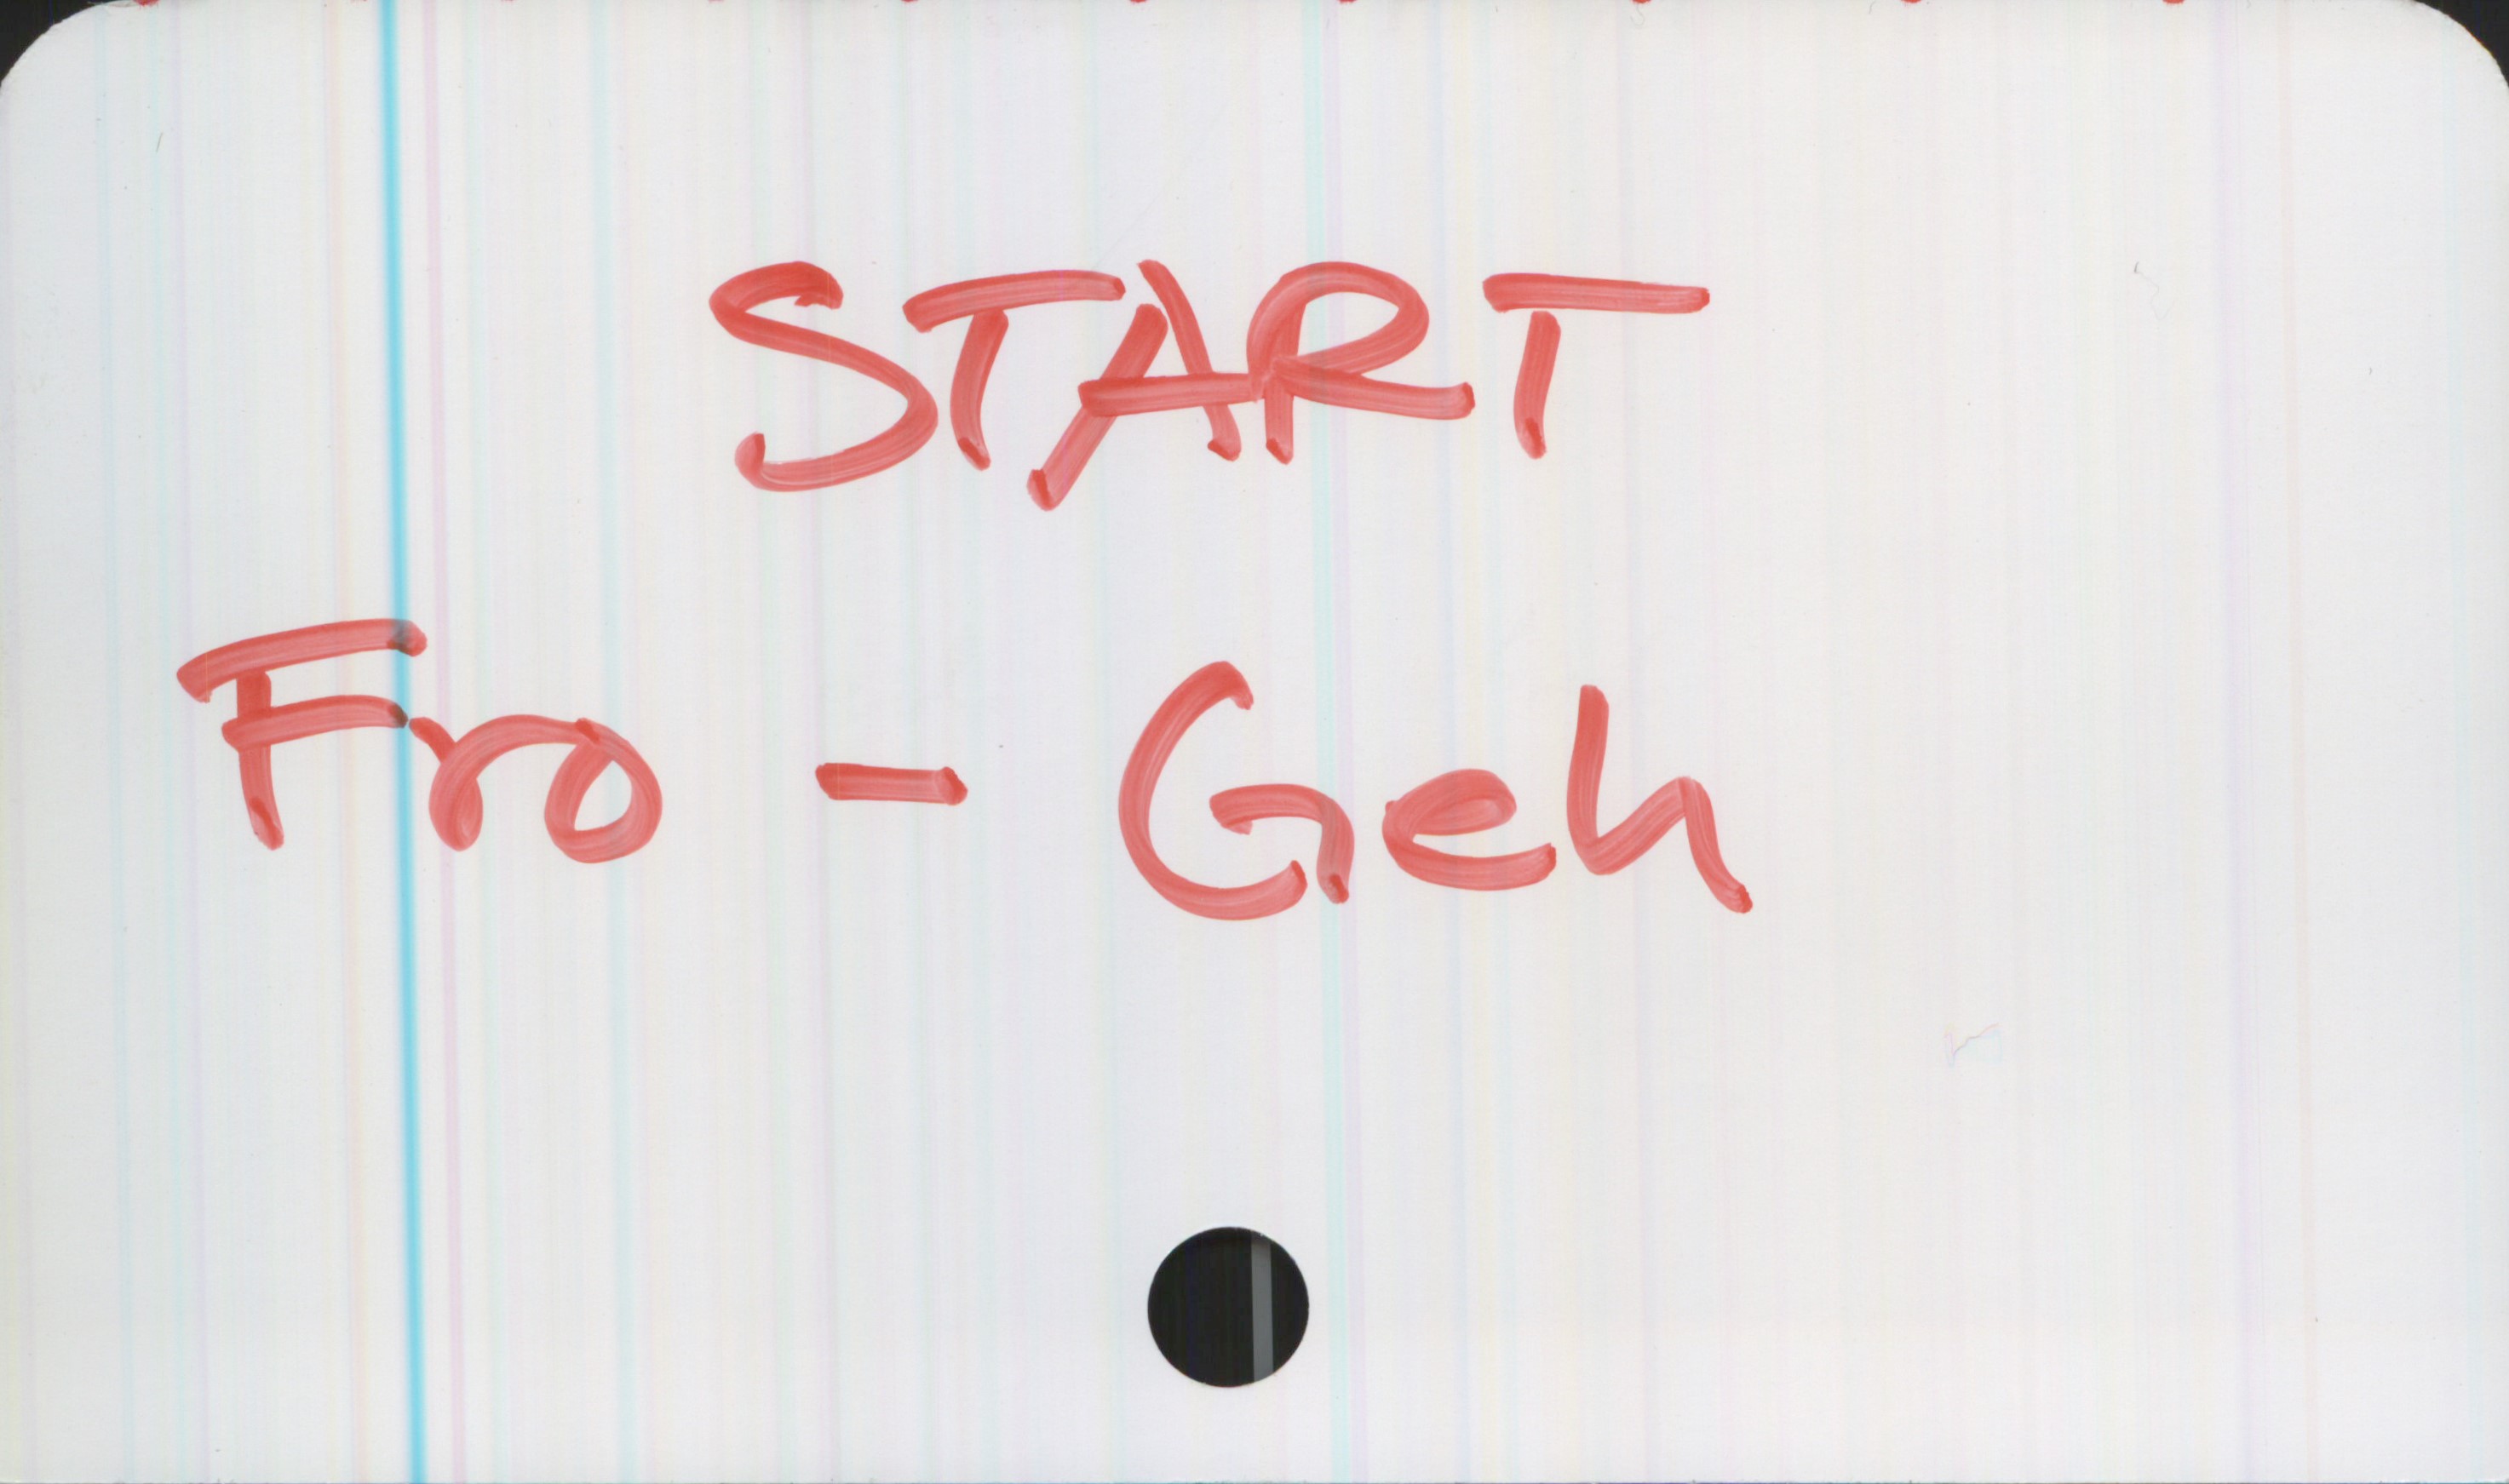 START START
Fro - Geh